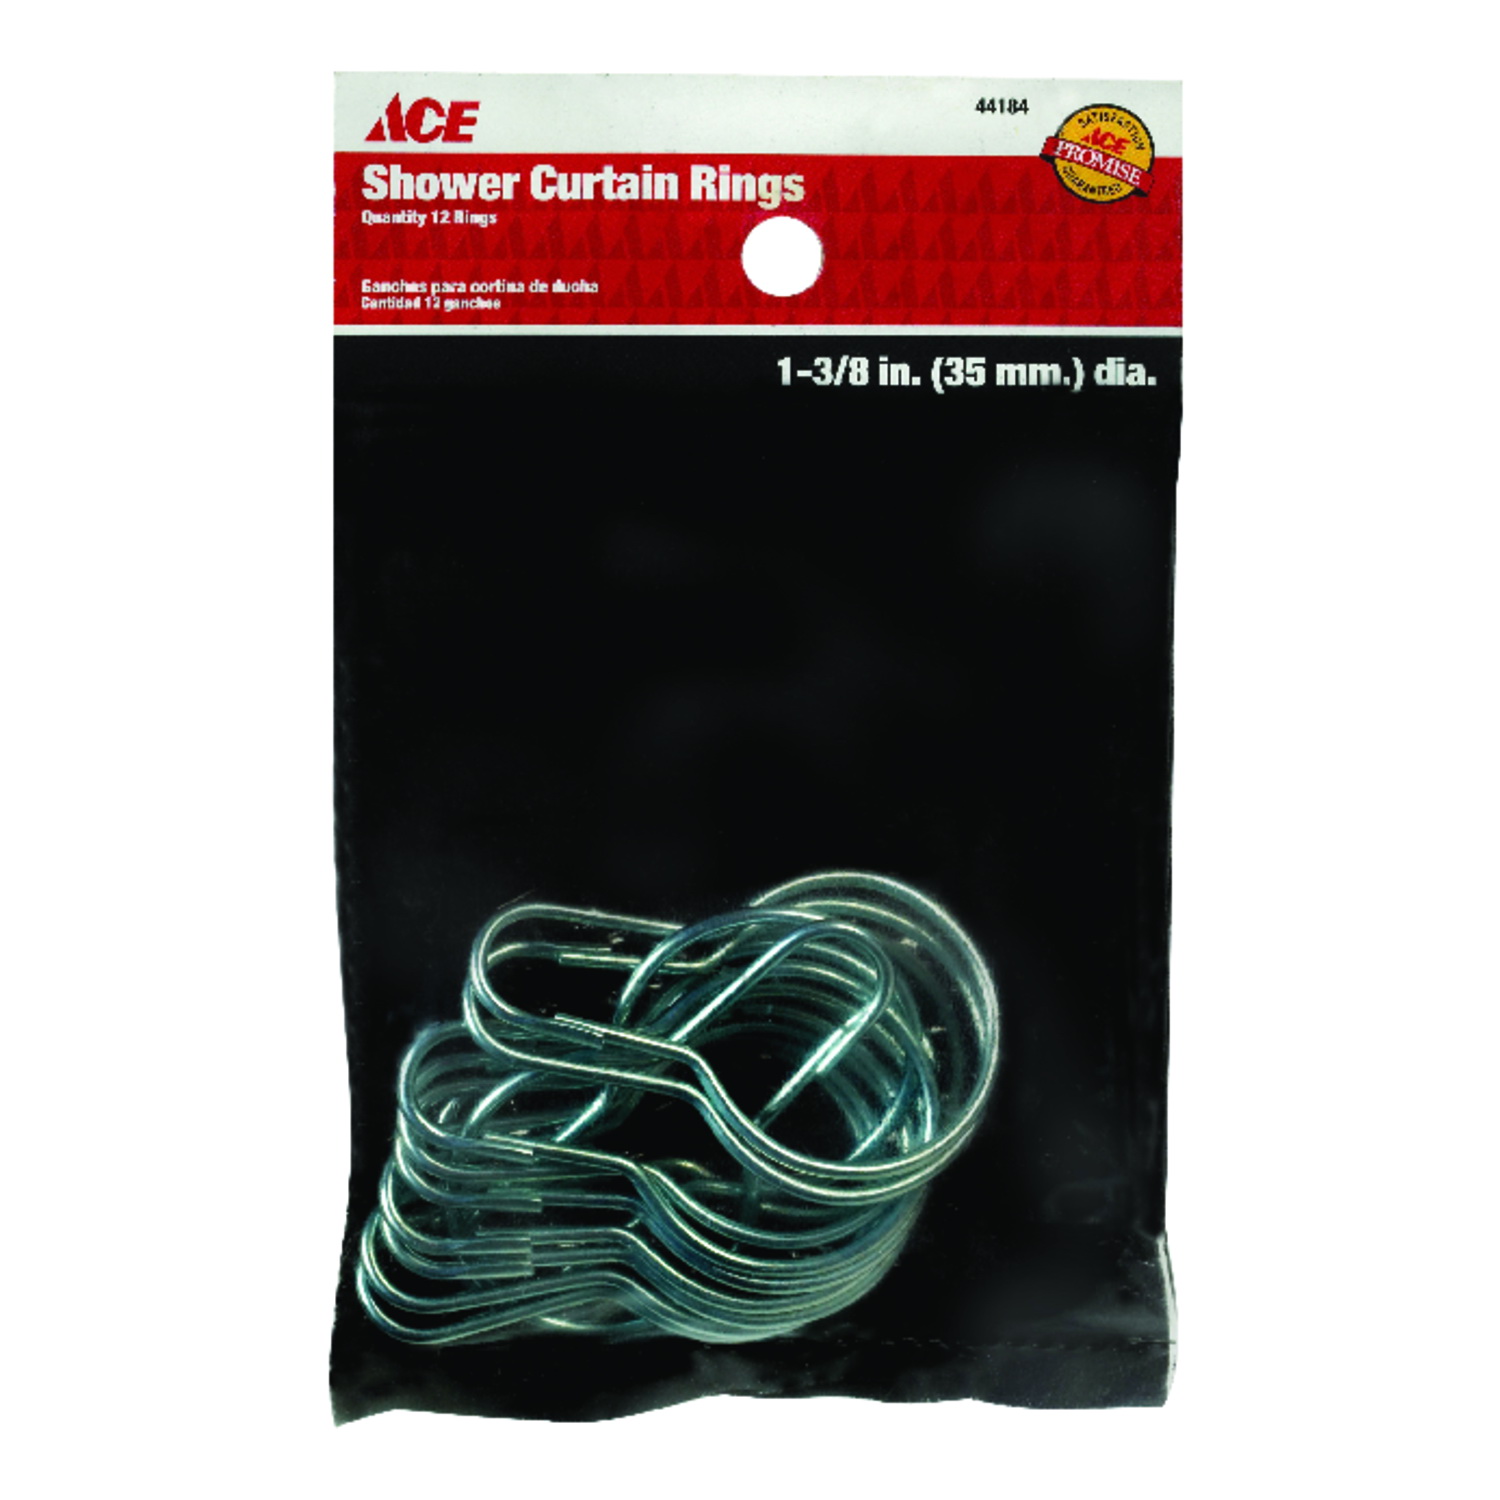 ACE ACE44184 Shower Curtain Ring, Steel, Zinc - 1